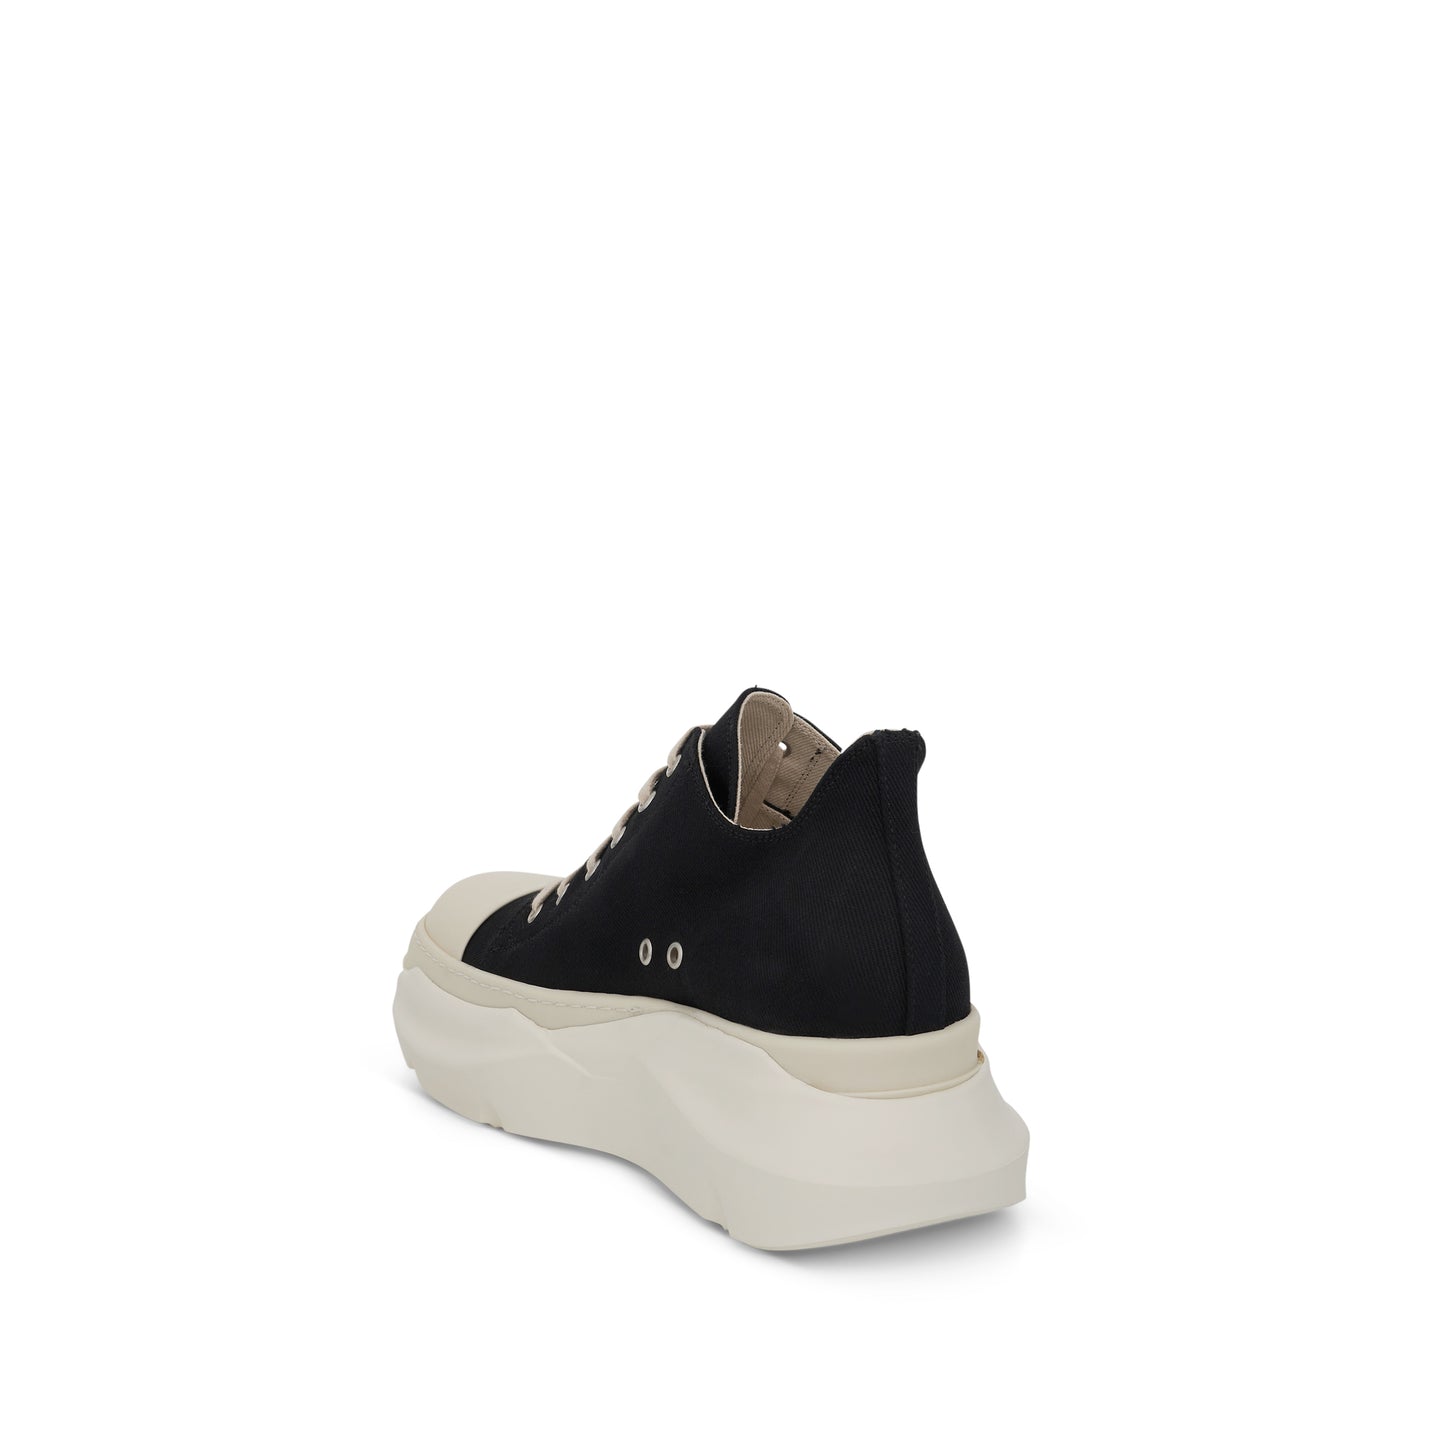 DRKSHDW Abstract Denim Low Sneaker in Black/Milk